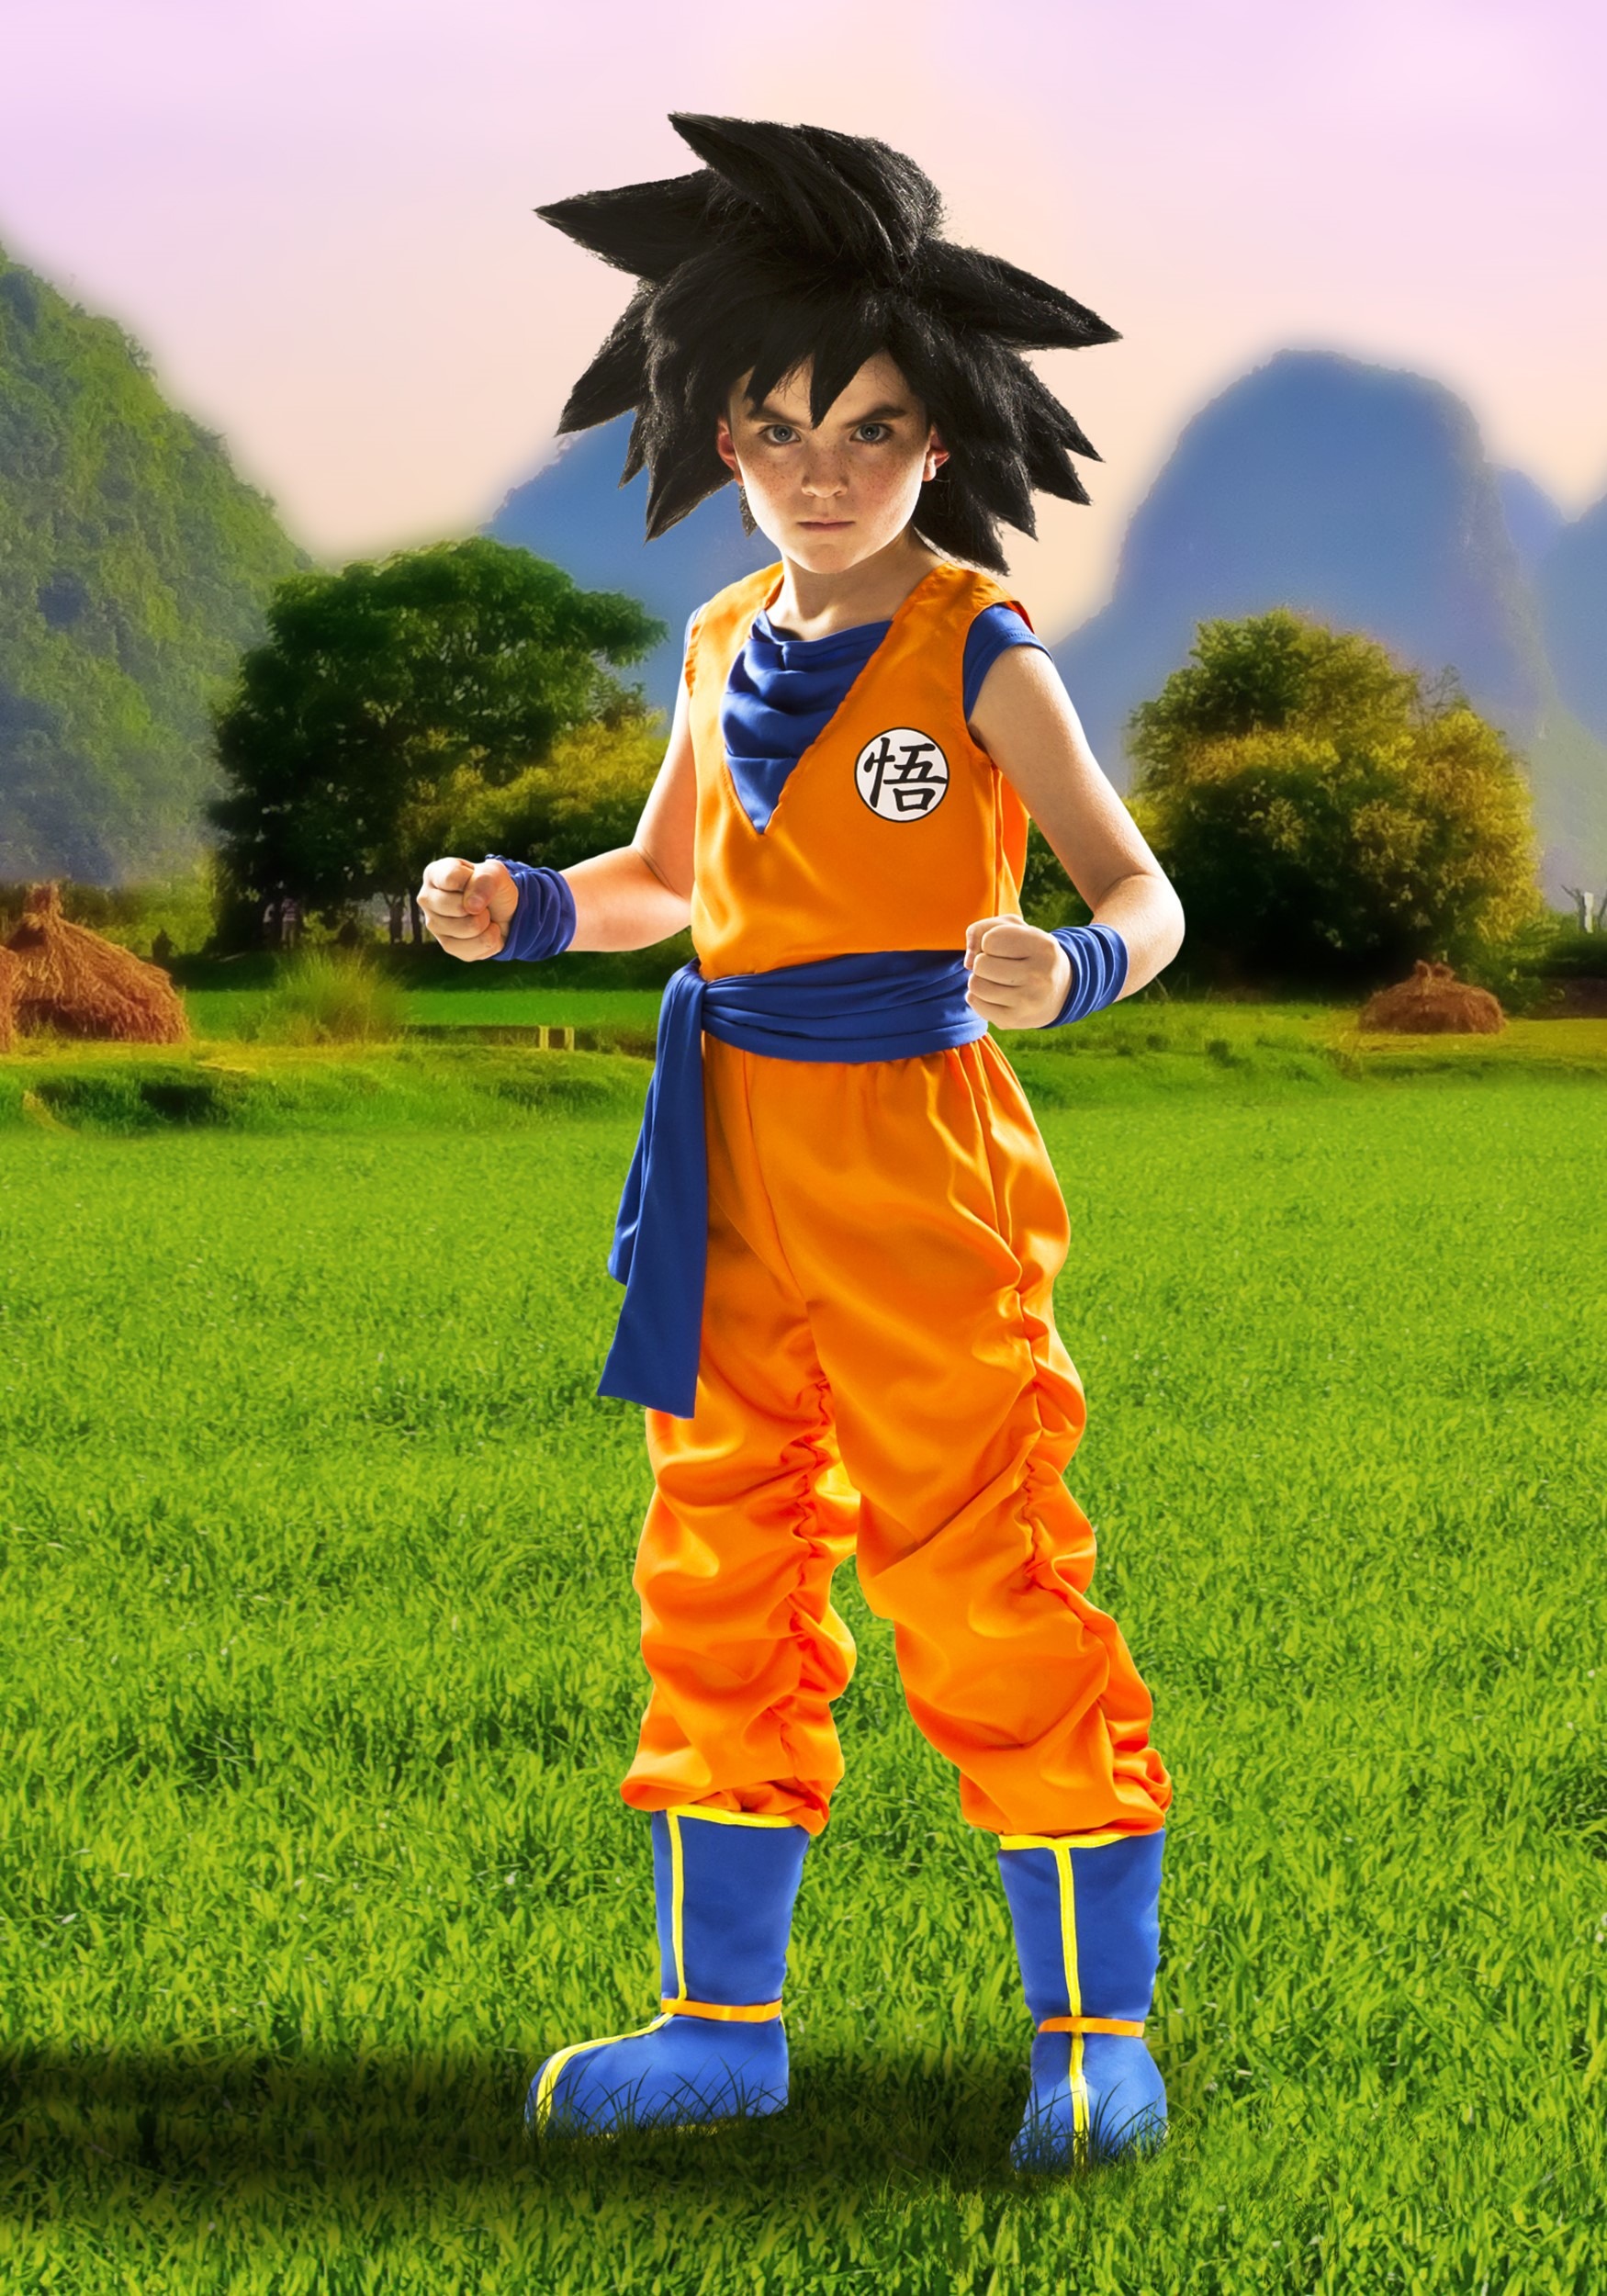 DBZ Kid's Goku Costume